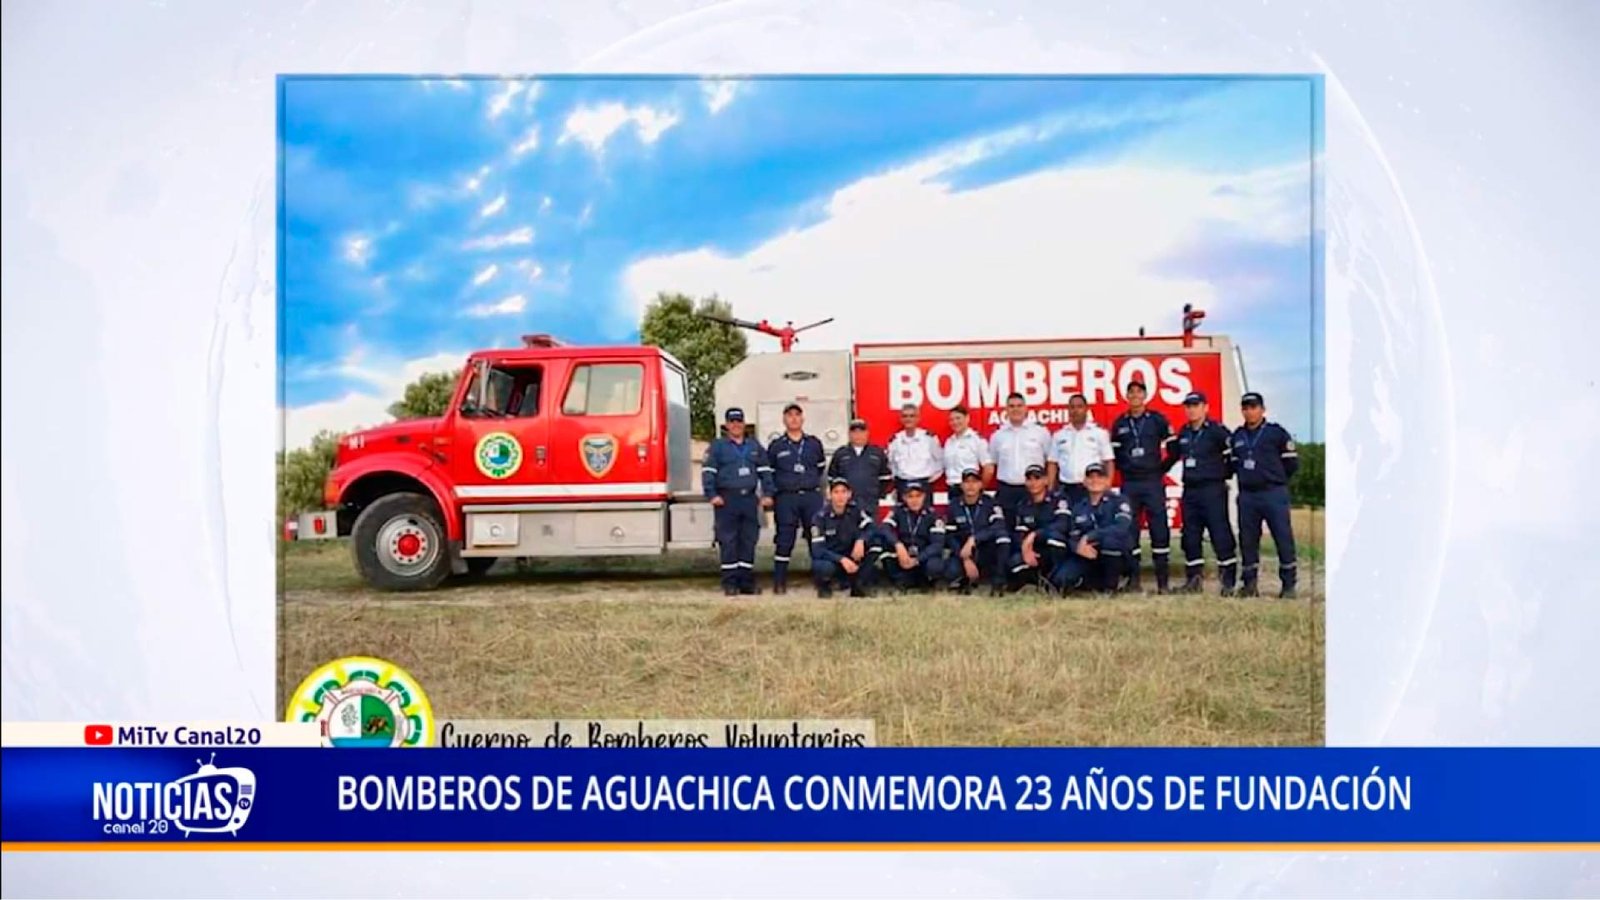 BOMBEROS DE AGUACHICA CONMEMORA 23 AÑOS DE FUNDACIÓN